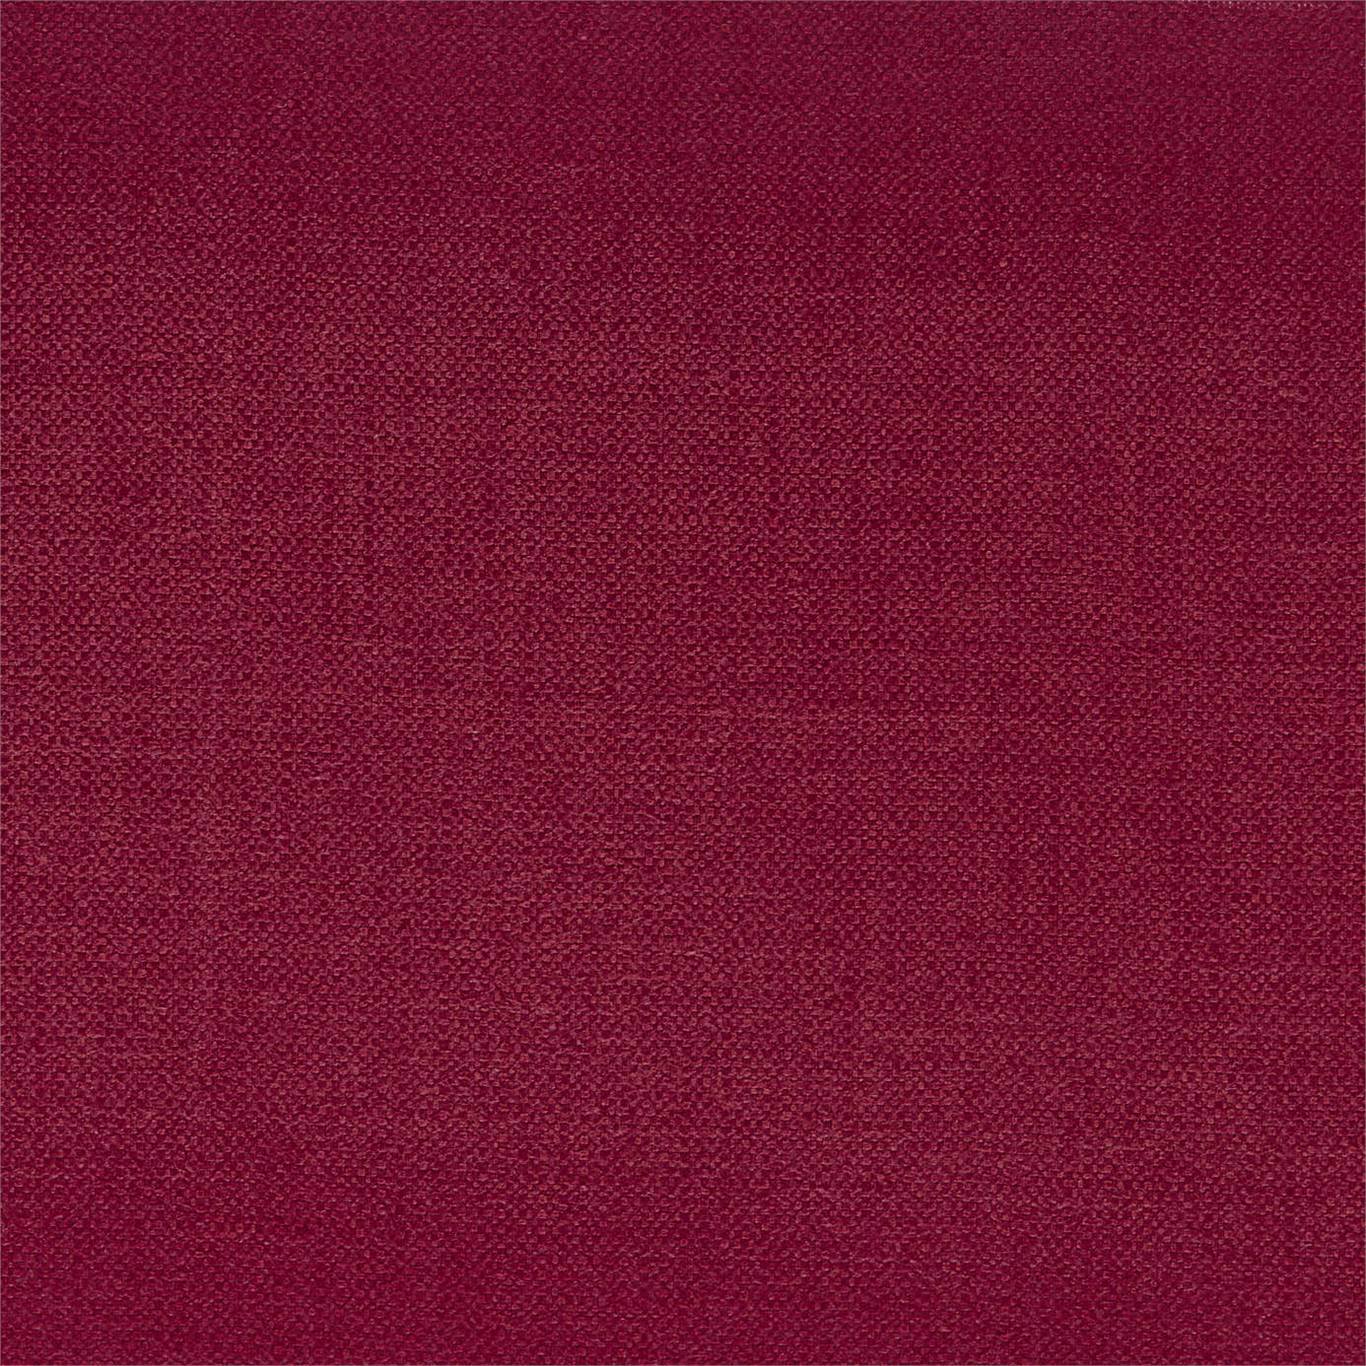 Lustre Bordeaux Fabric by ZOF